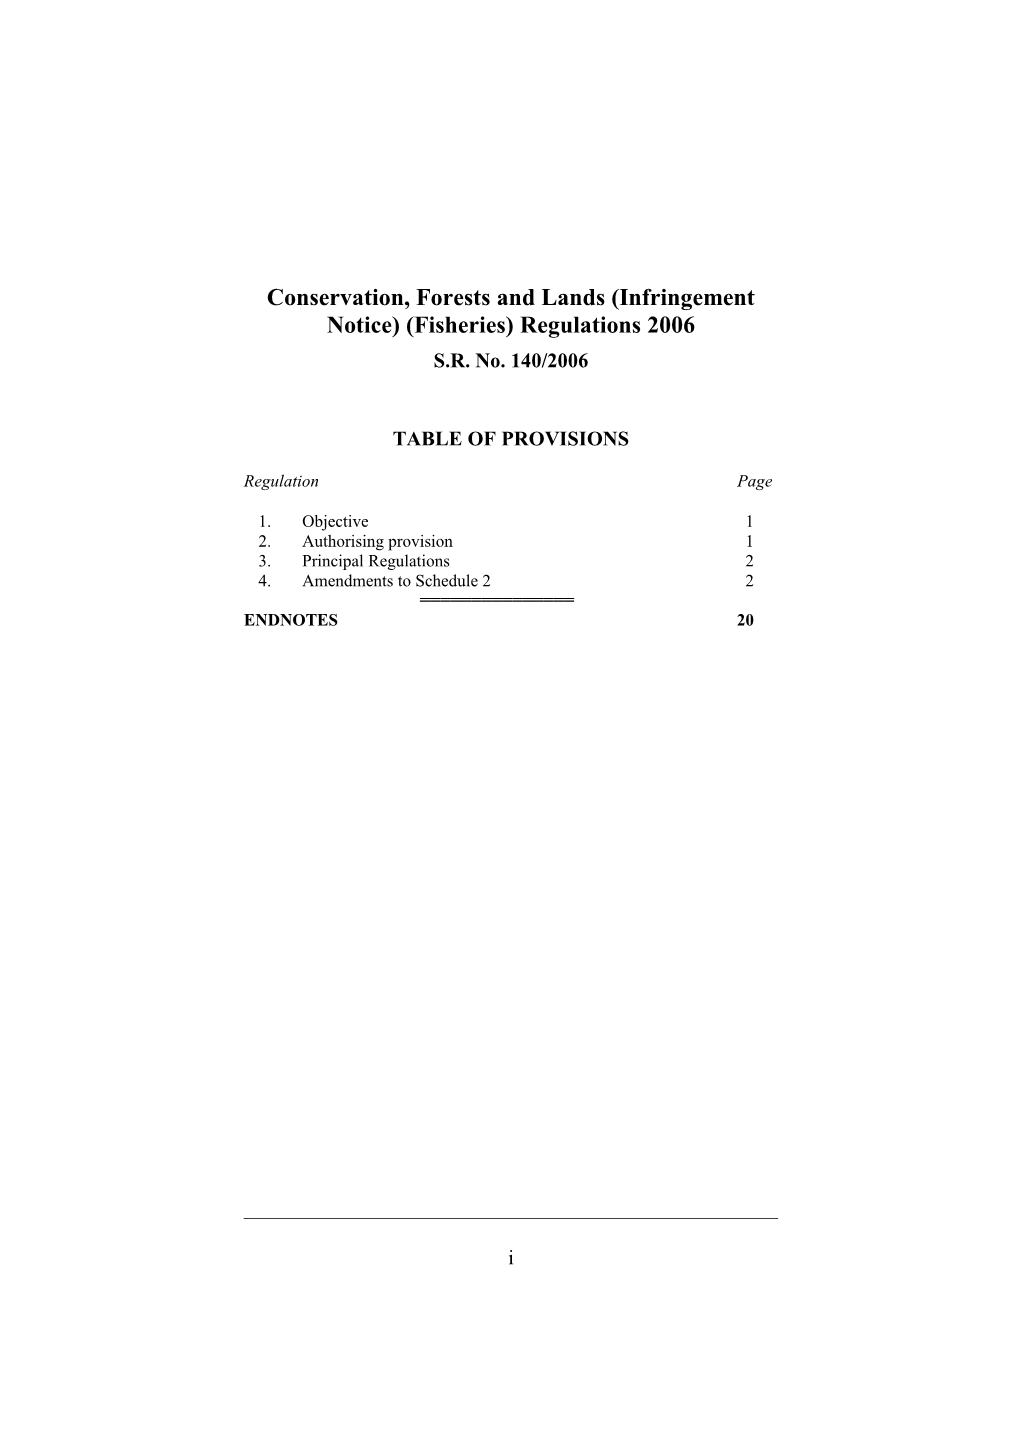 Conservation, Forests and Lands (Infringement Notice) (Fisheries) Regulations 2006